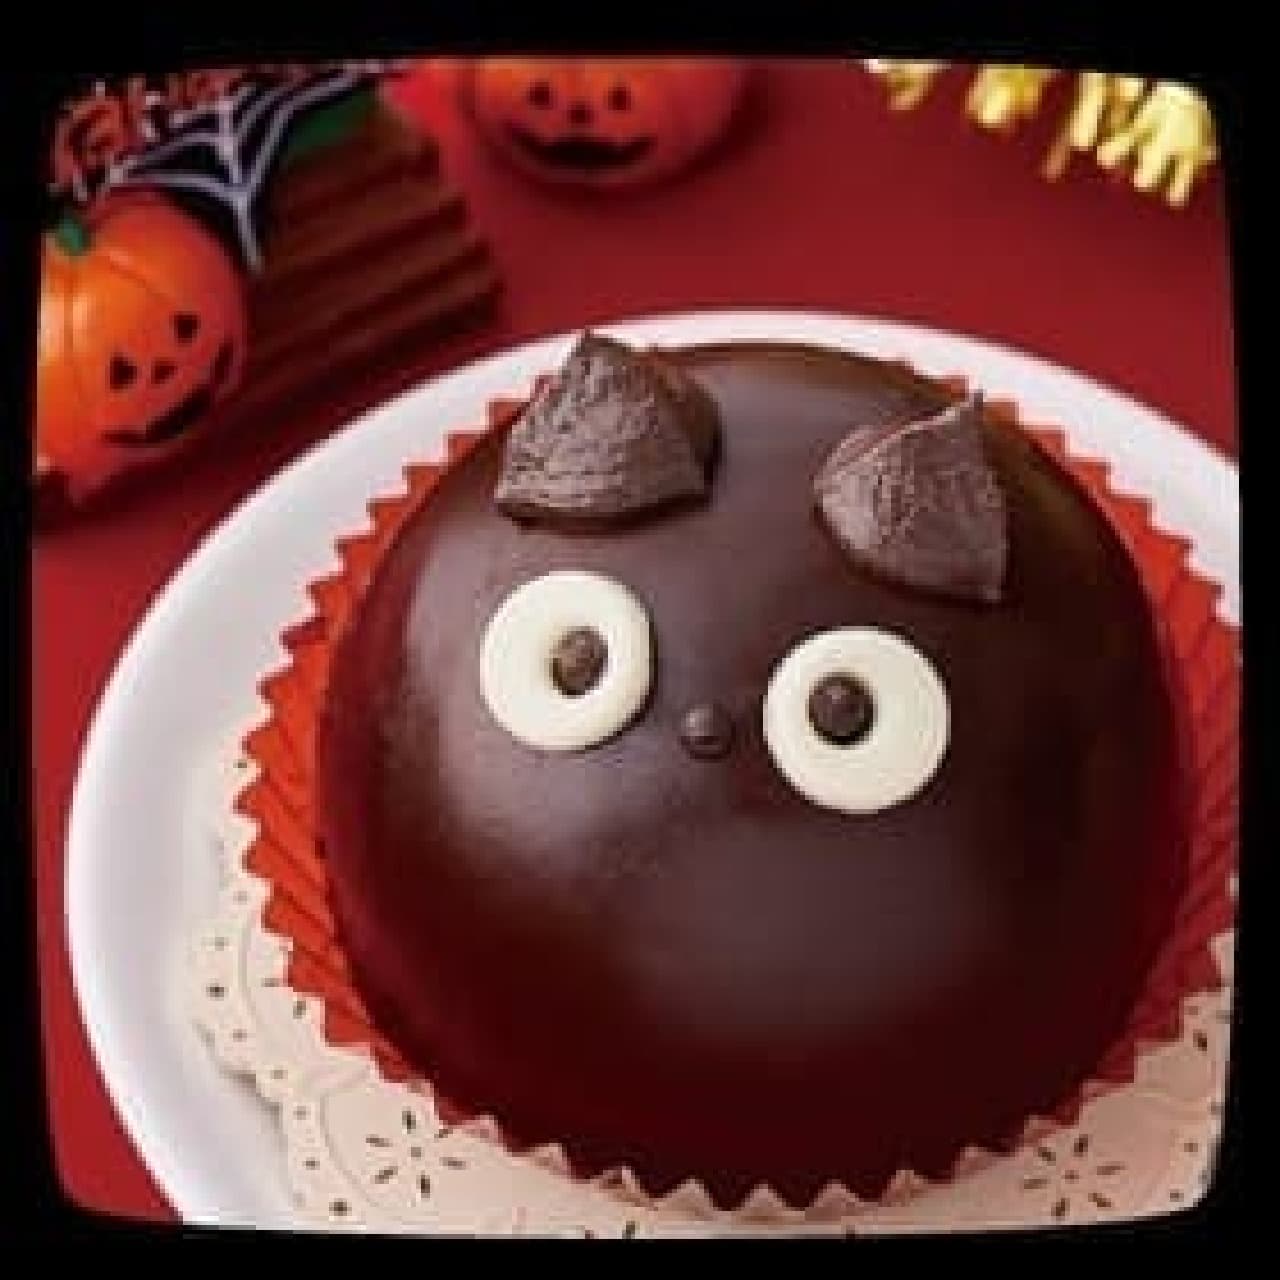 7-ELEVEN "Halloween Black Cat Chocolate Cake"